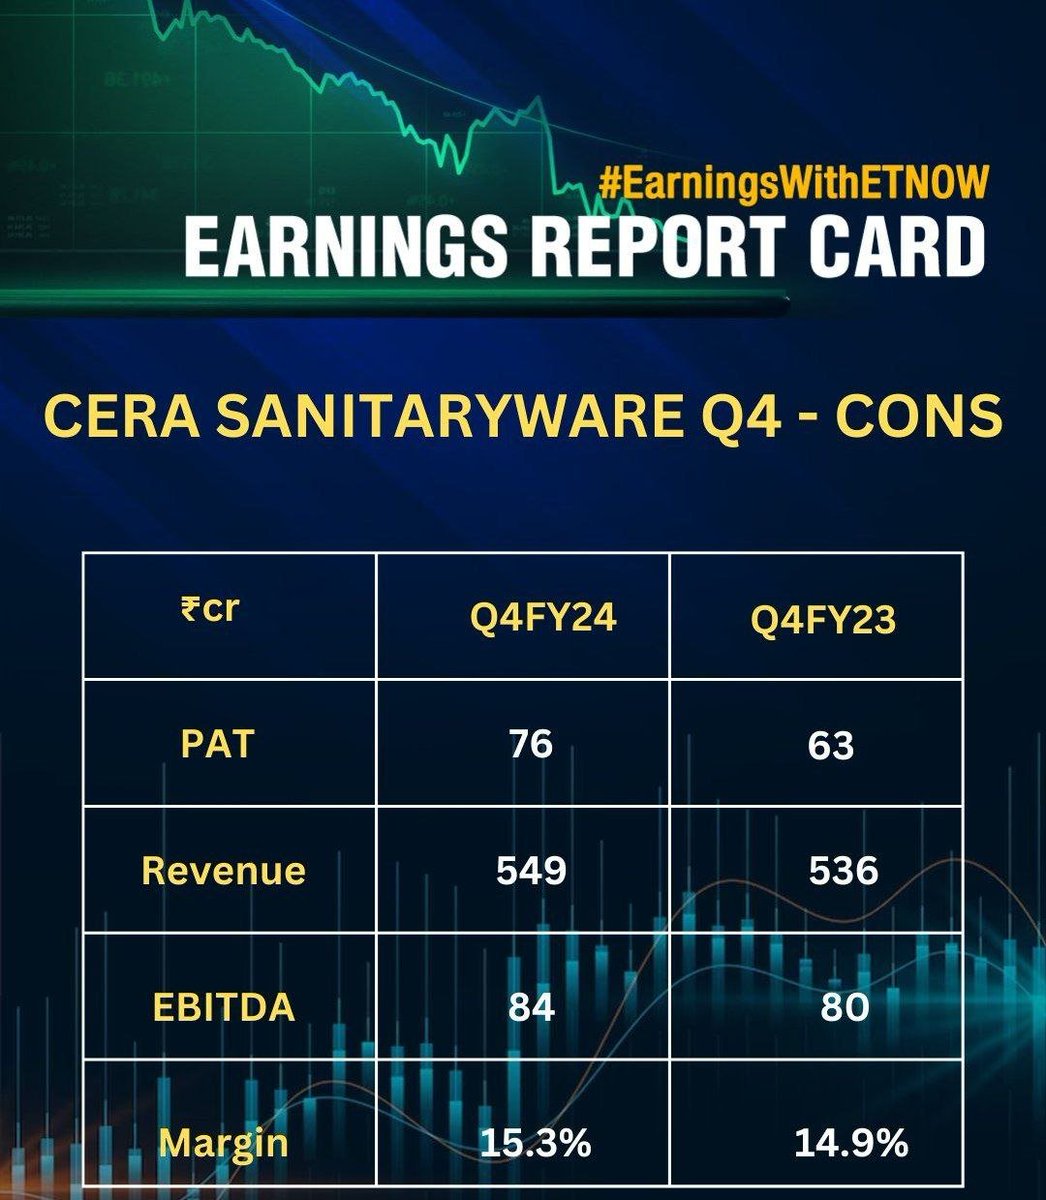 Cera Sanitaryware Q4: PAT at ₹76 cr, revenue at ₹549 cr